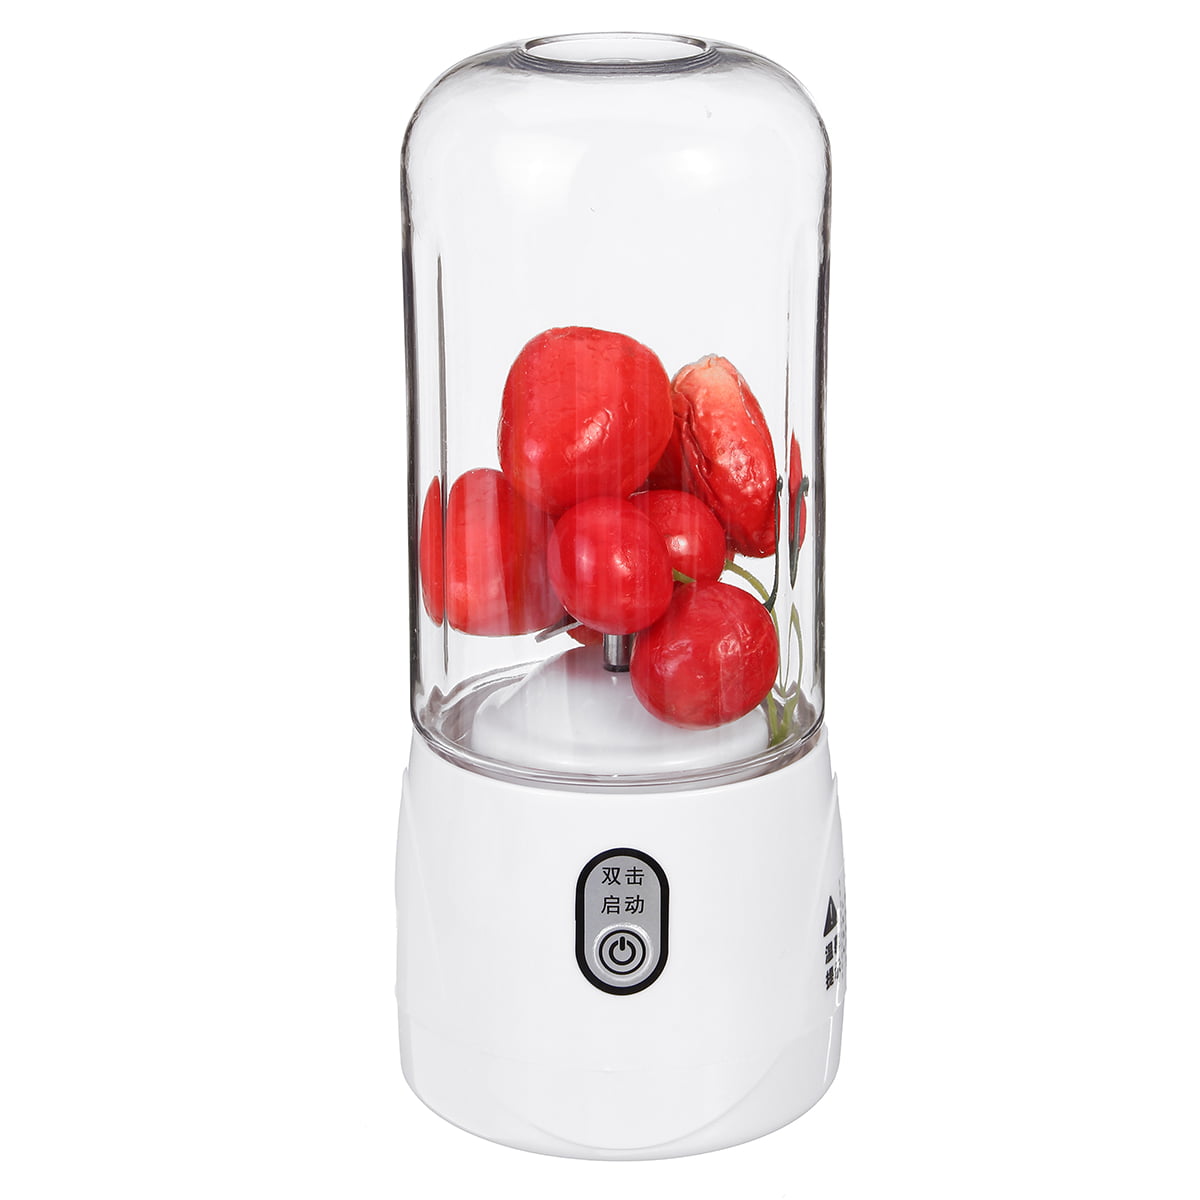 Juice Maker Portable for Ice for Baby Food White Handheld Fruit Machine Fruit Juicer